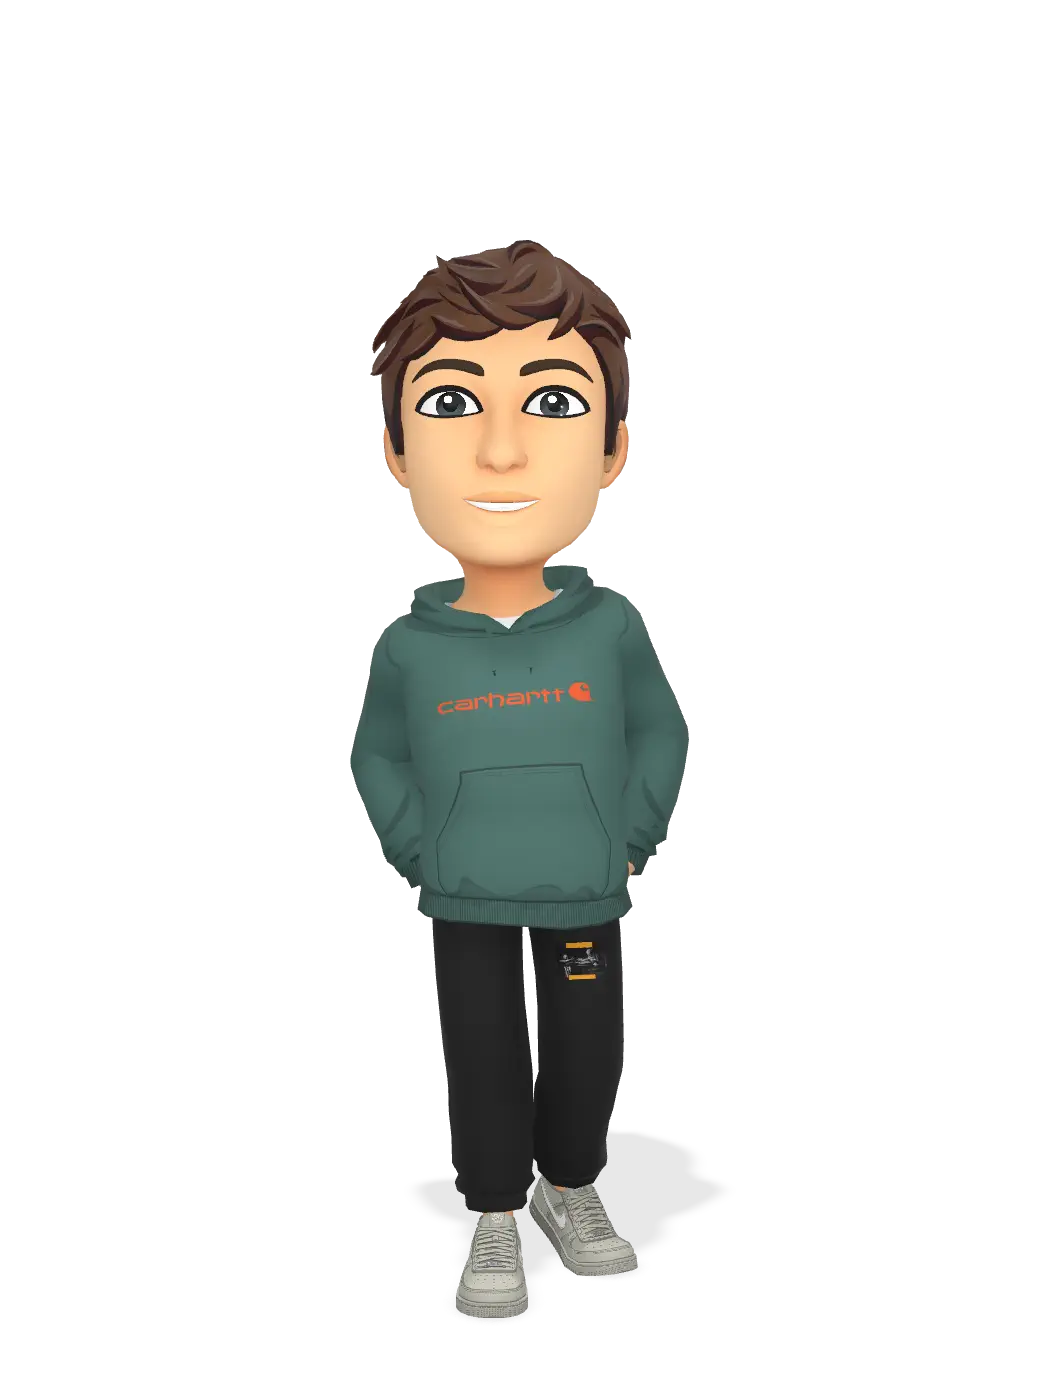 3D Bitmoji for mattslosh avatar